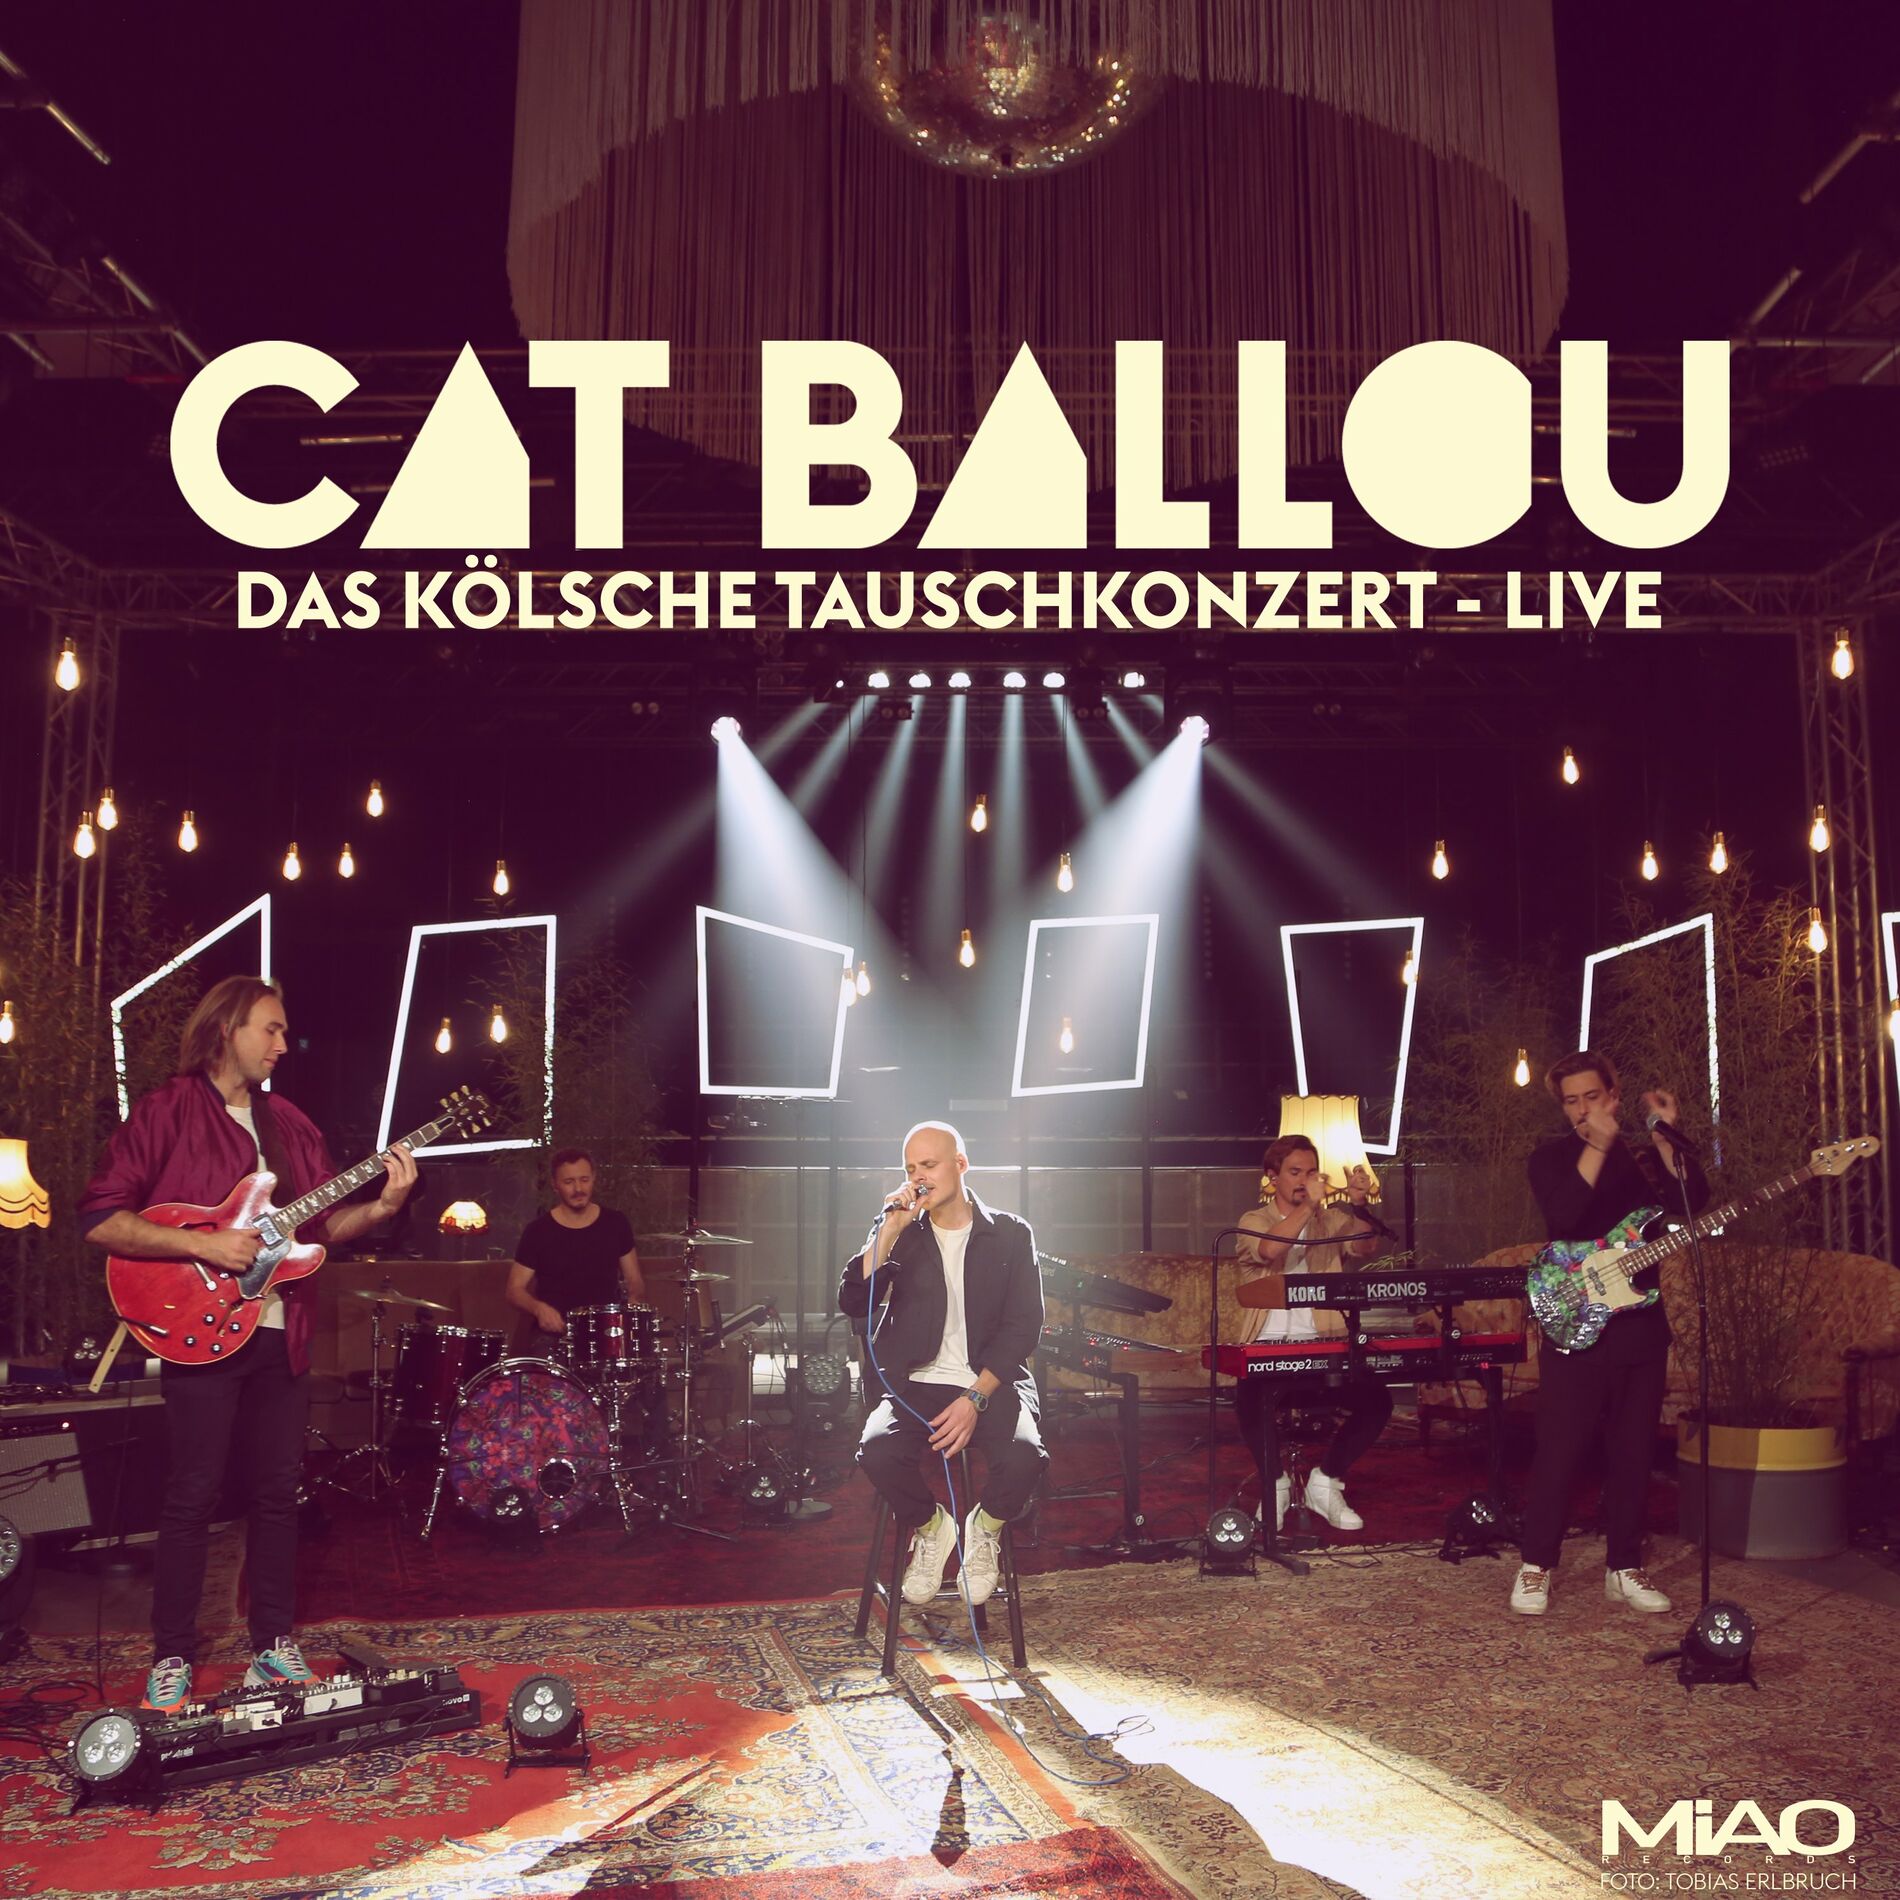 Cat Ballou: albums